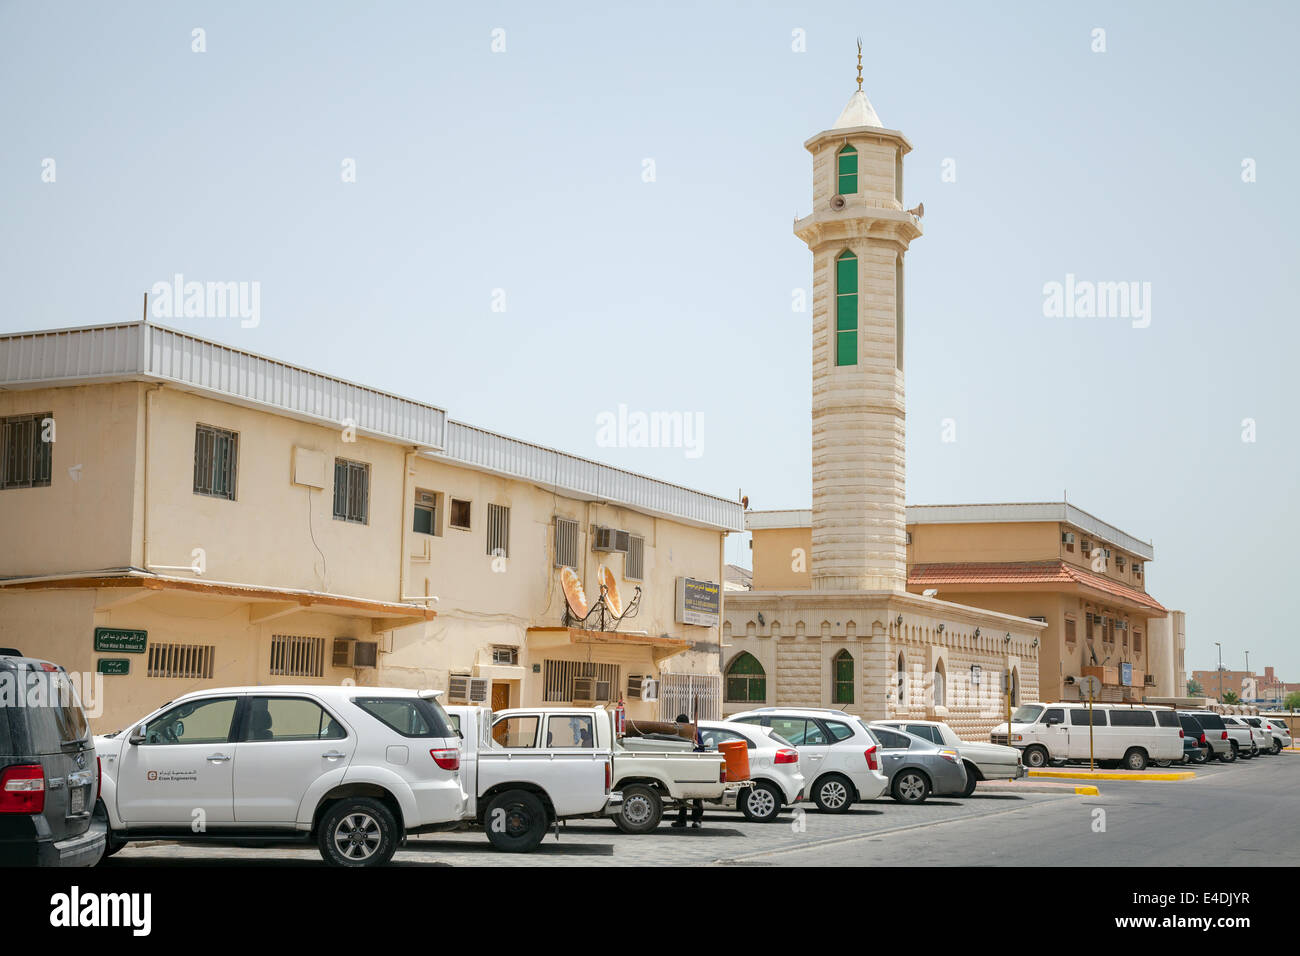 RAS TANURA, SAUDI ARABIA - MAY 10, 2014: Street view with cars and mosque minaret, Saudi Arabia Stock Photo